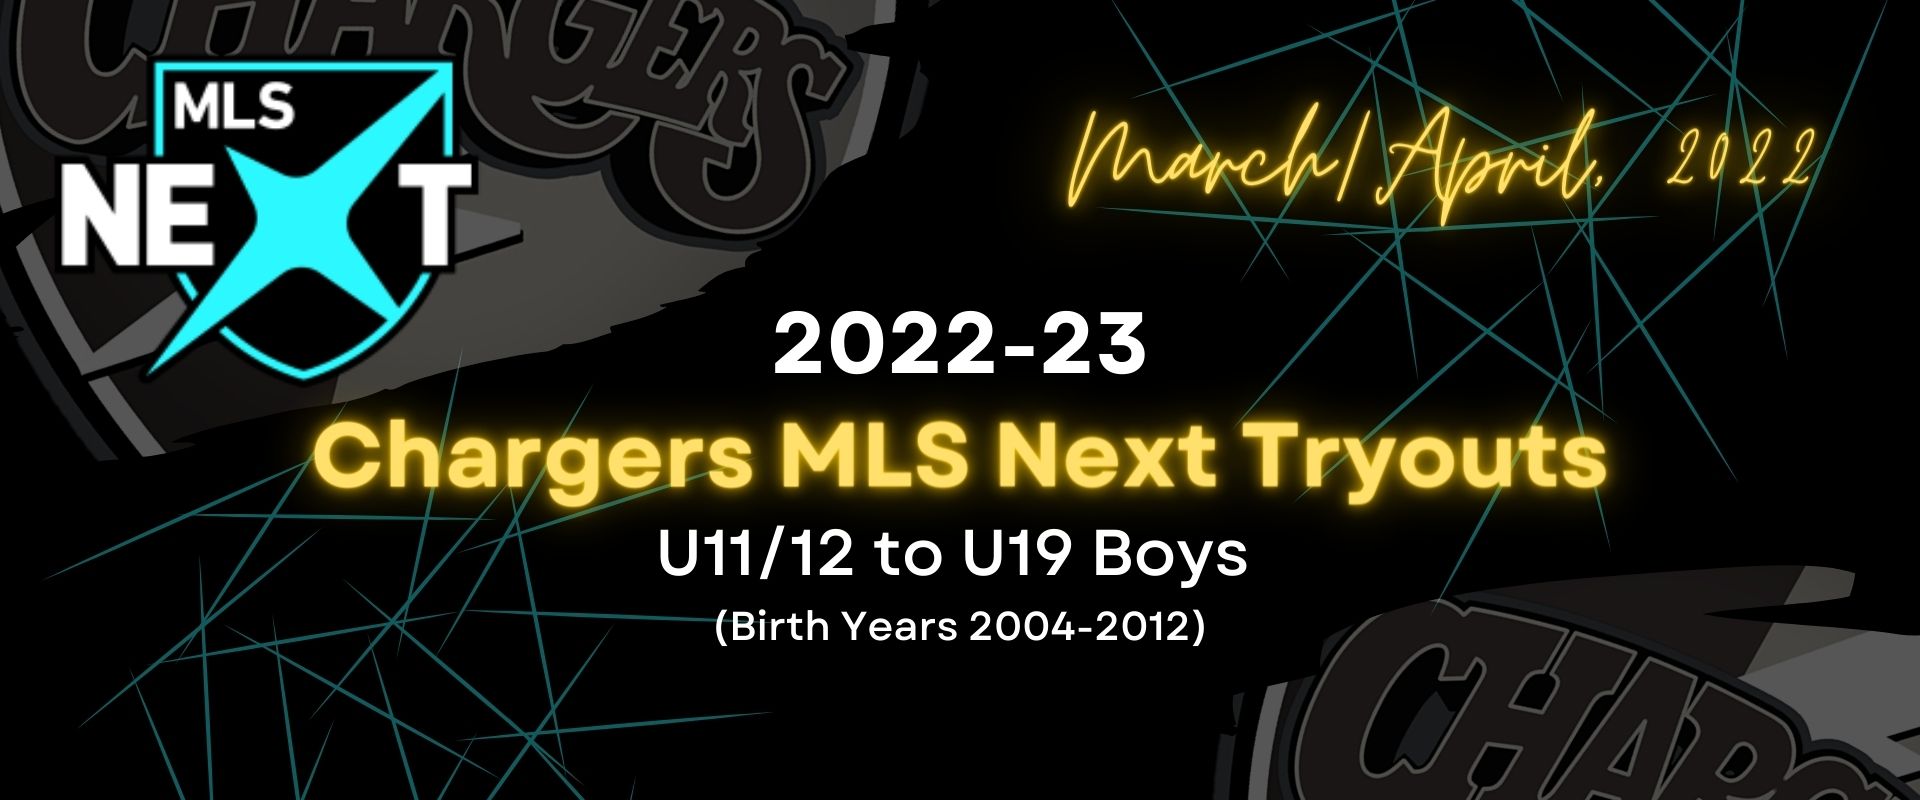 MLS Next Tryouts for 2022-23 Season